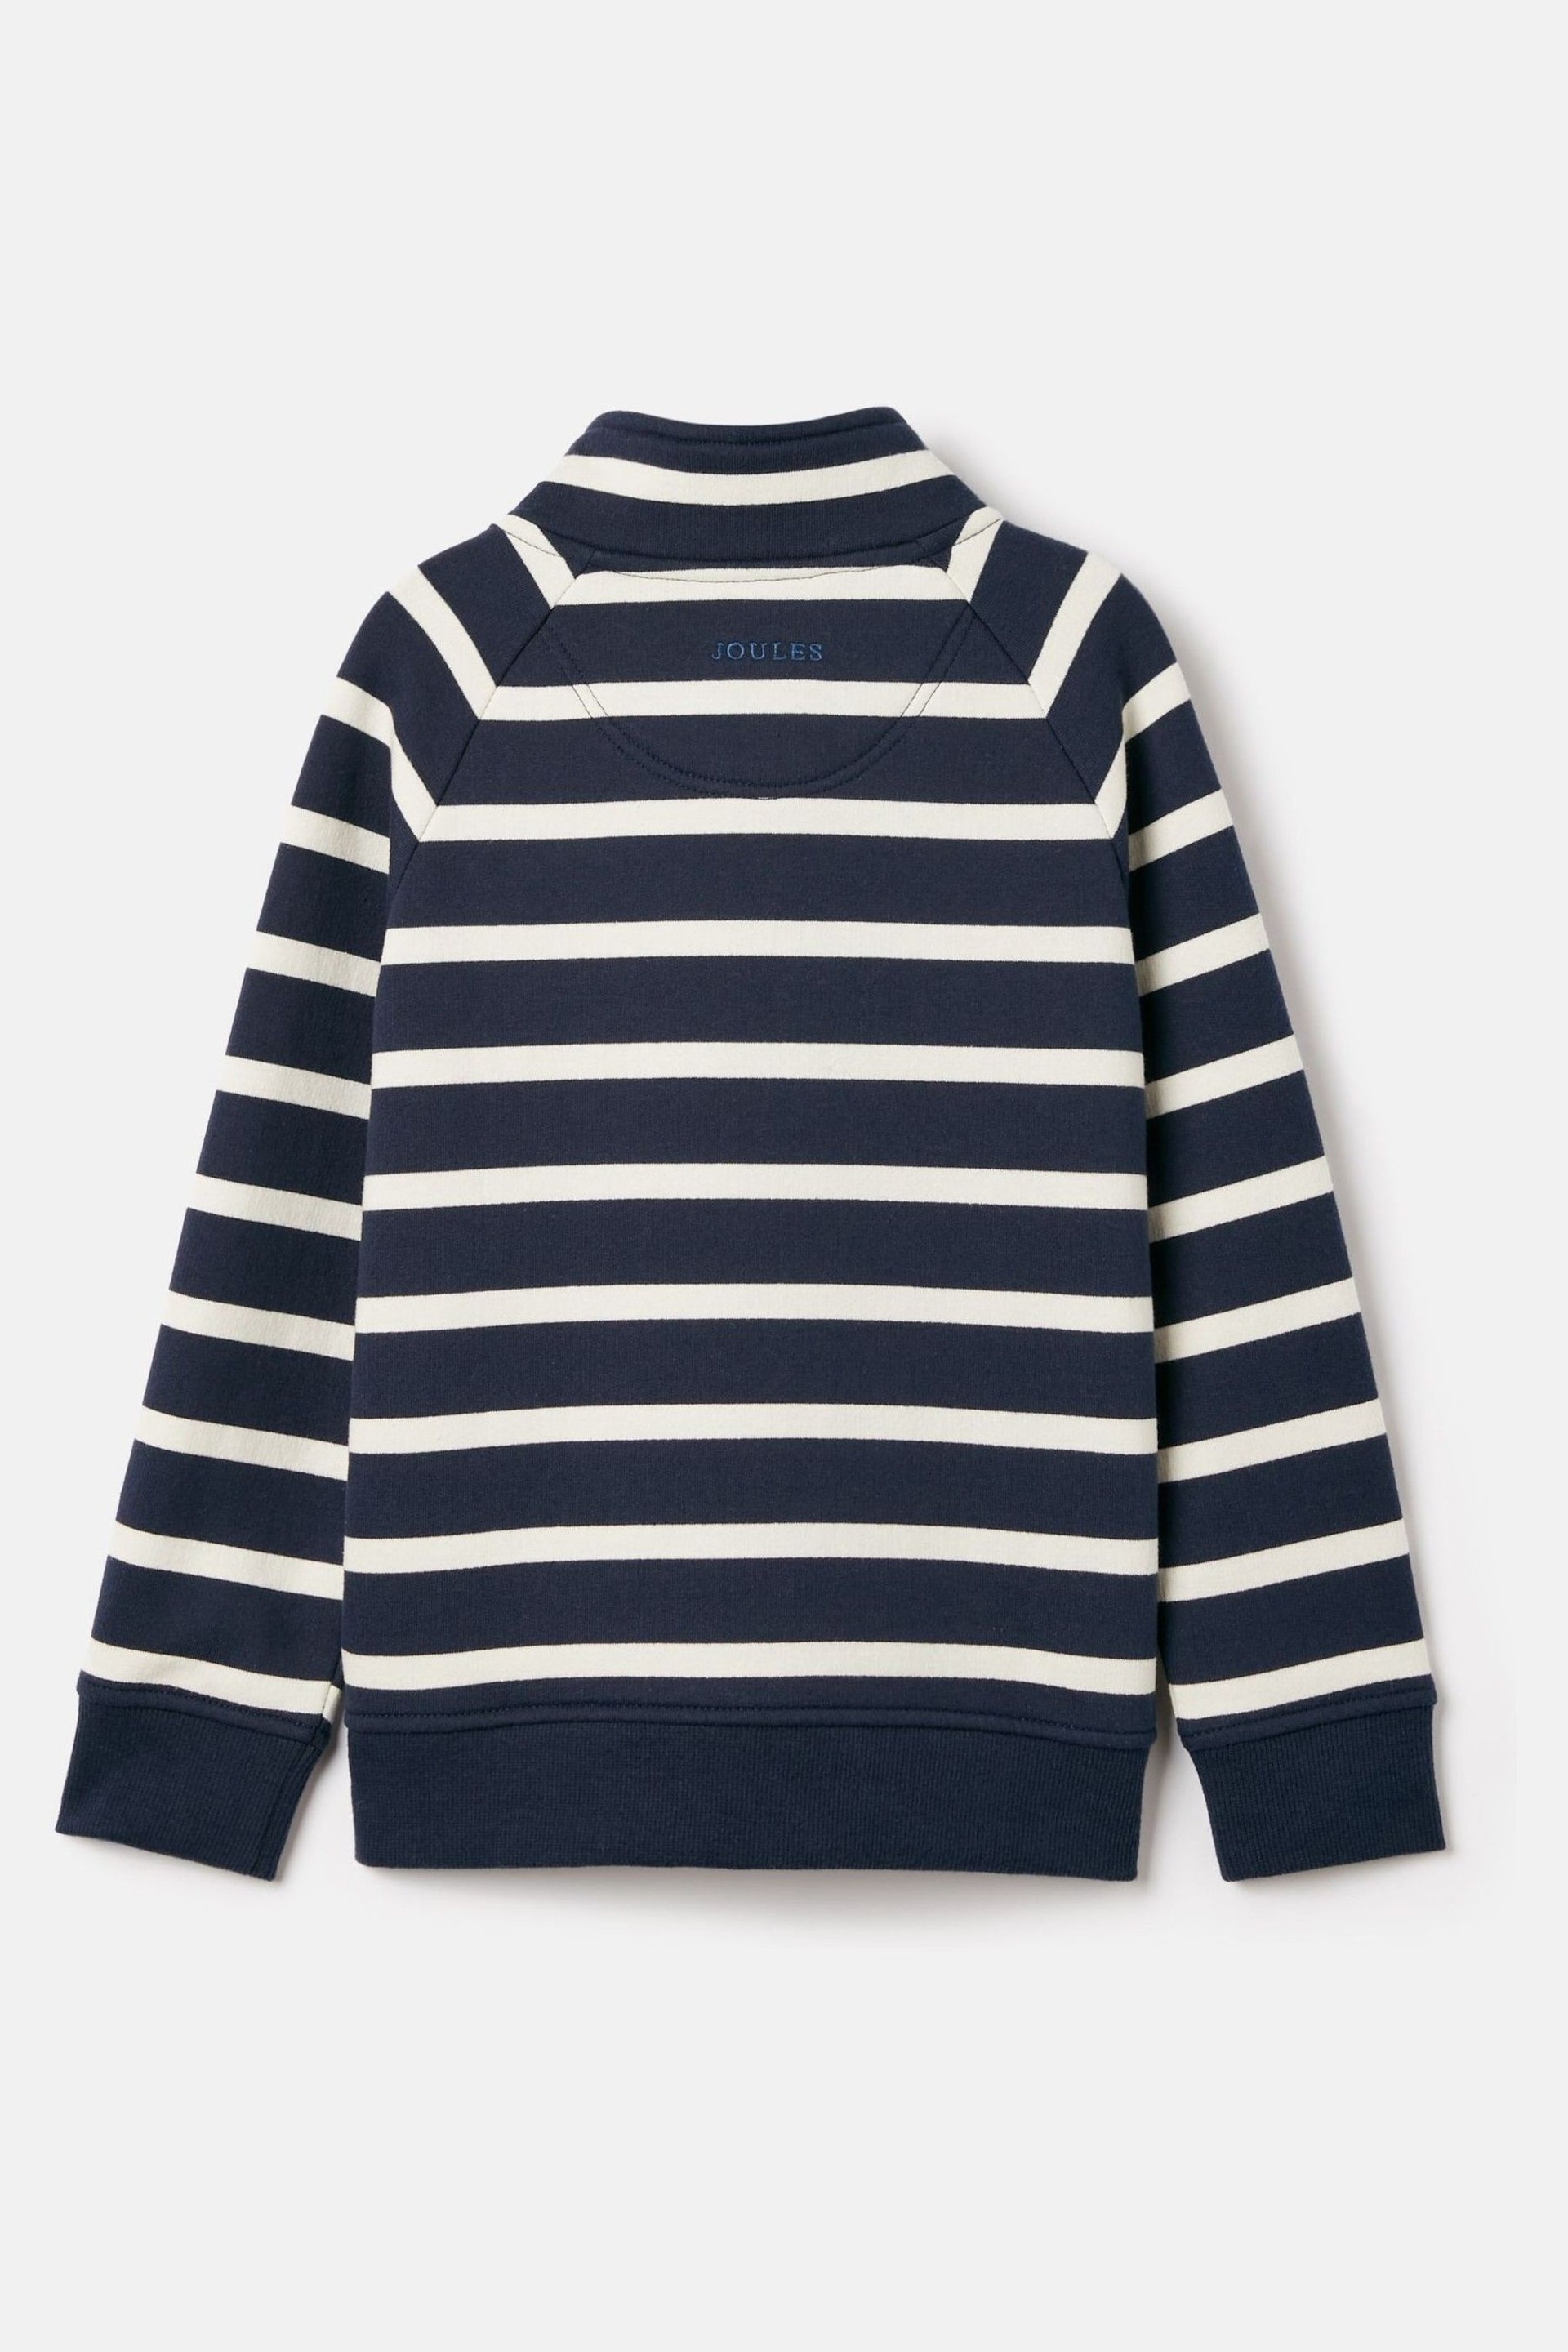 Joules Finn Navy Striped Quarter Zip Sweatshirt - Image 7 of 11